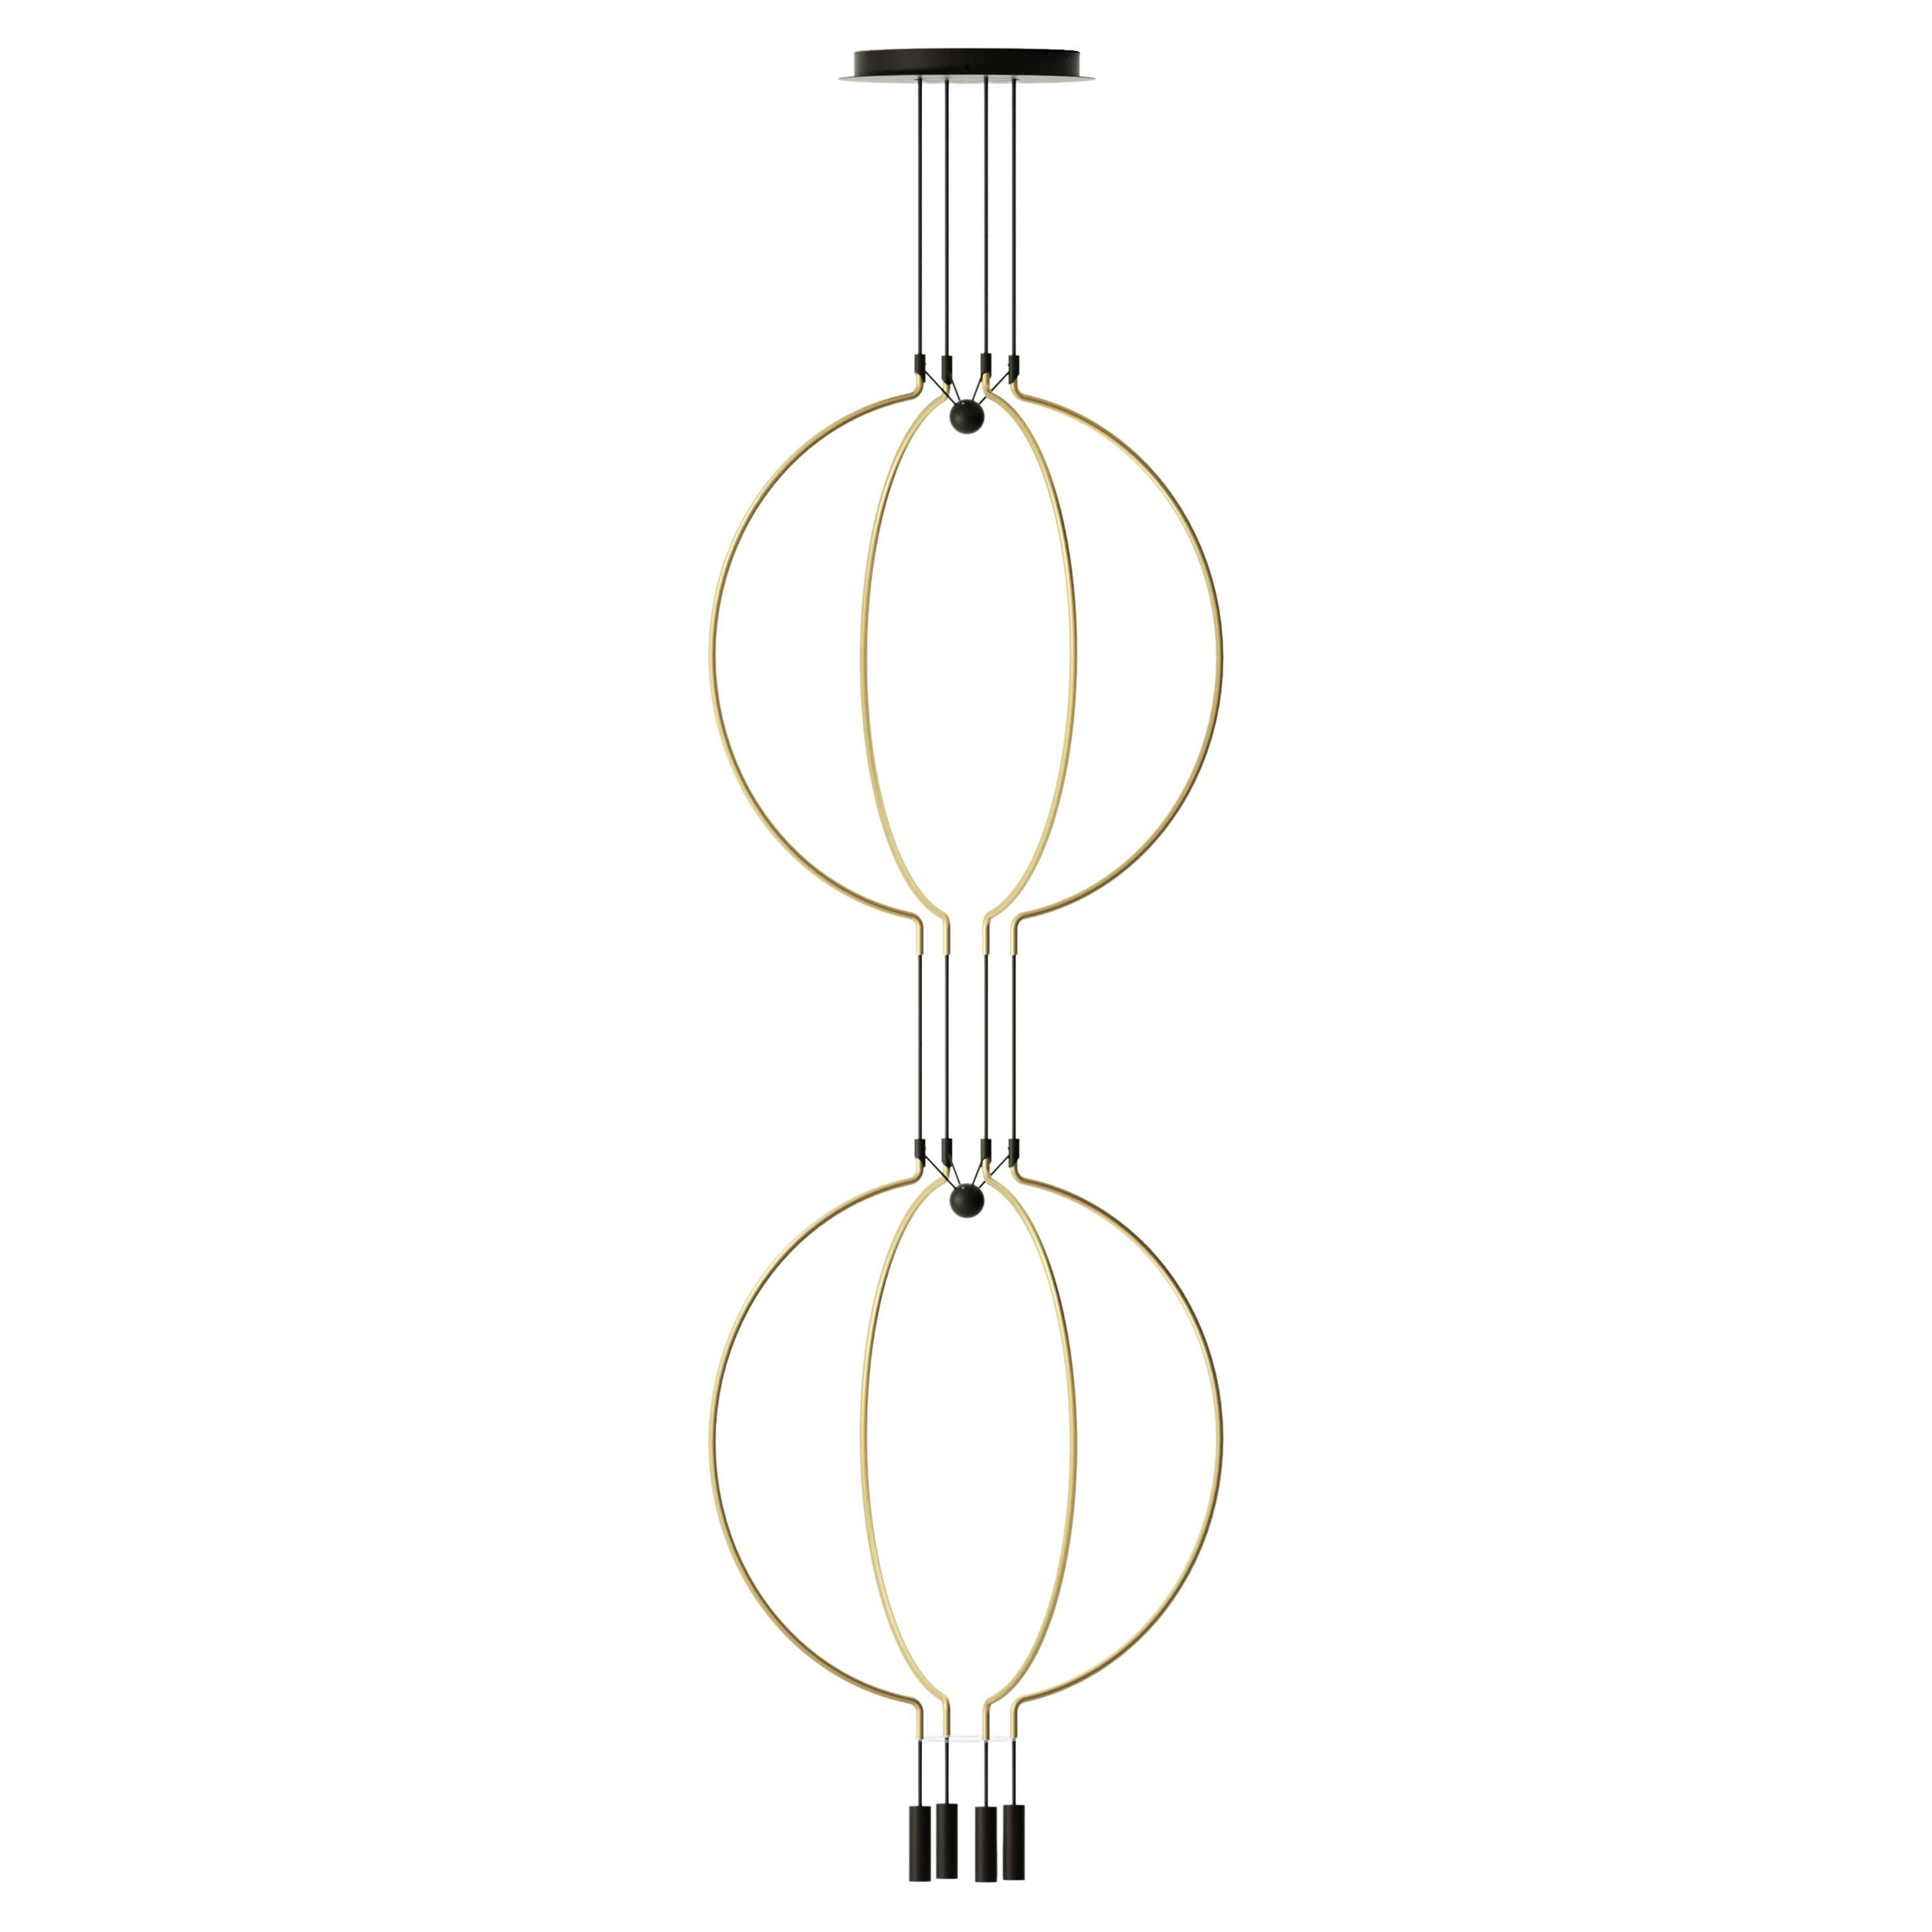 Axolight Liaison Model M4 Pendant Lamp in Gold/Black by Sara Moroni For Sale